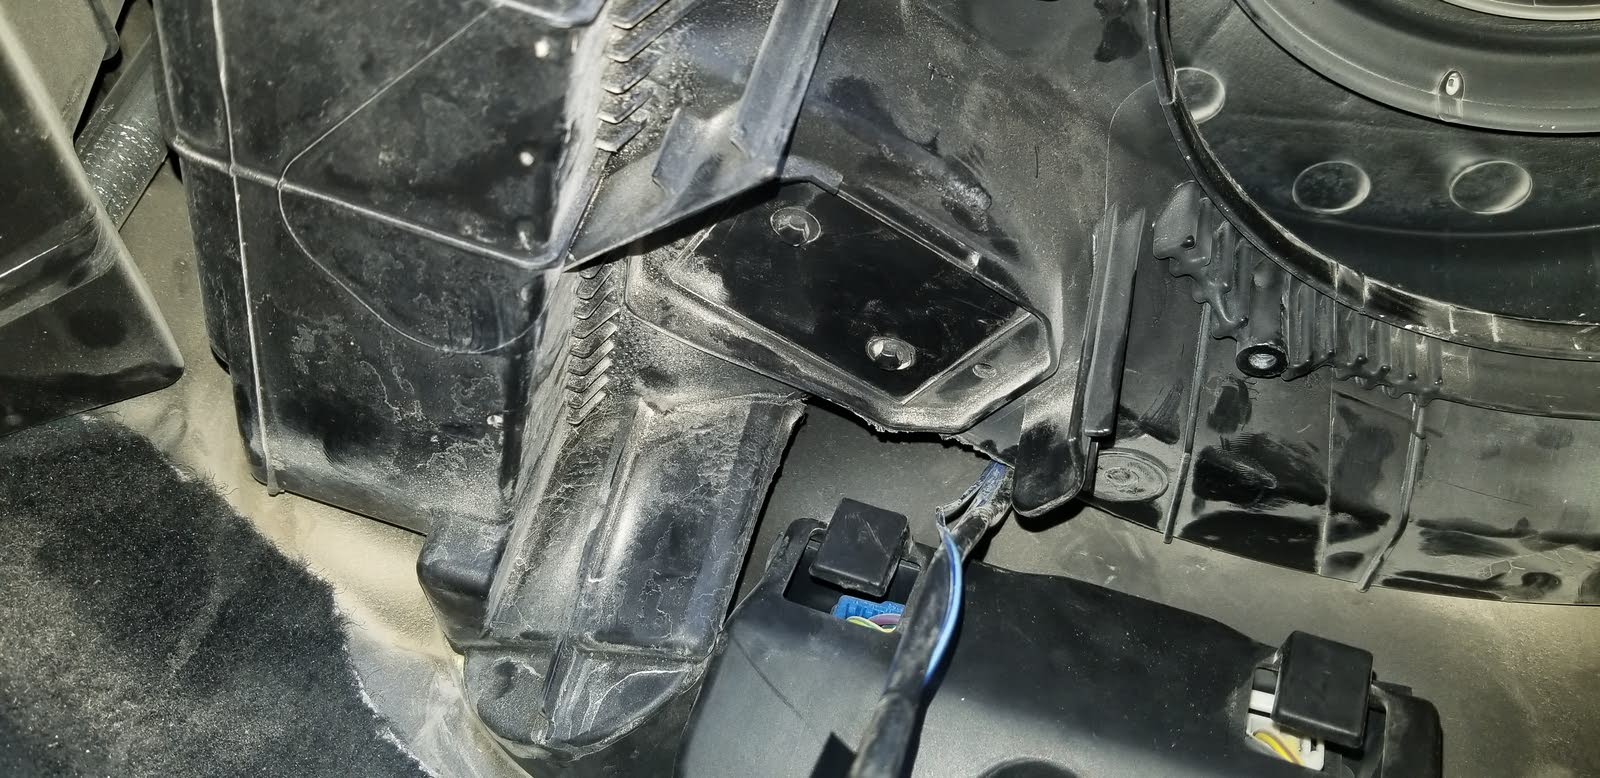 Dodge Ram Heater Control Problems - Ultimate Dodge 2017 Ram 2500 Heater Not Working